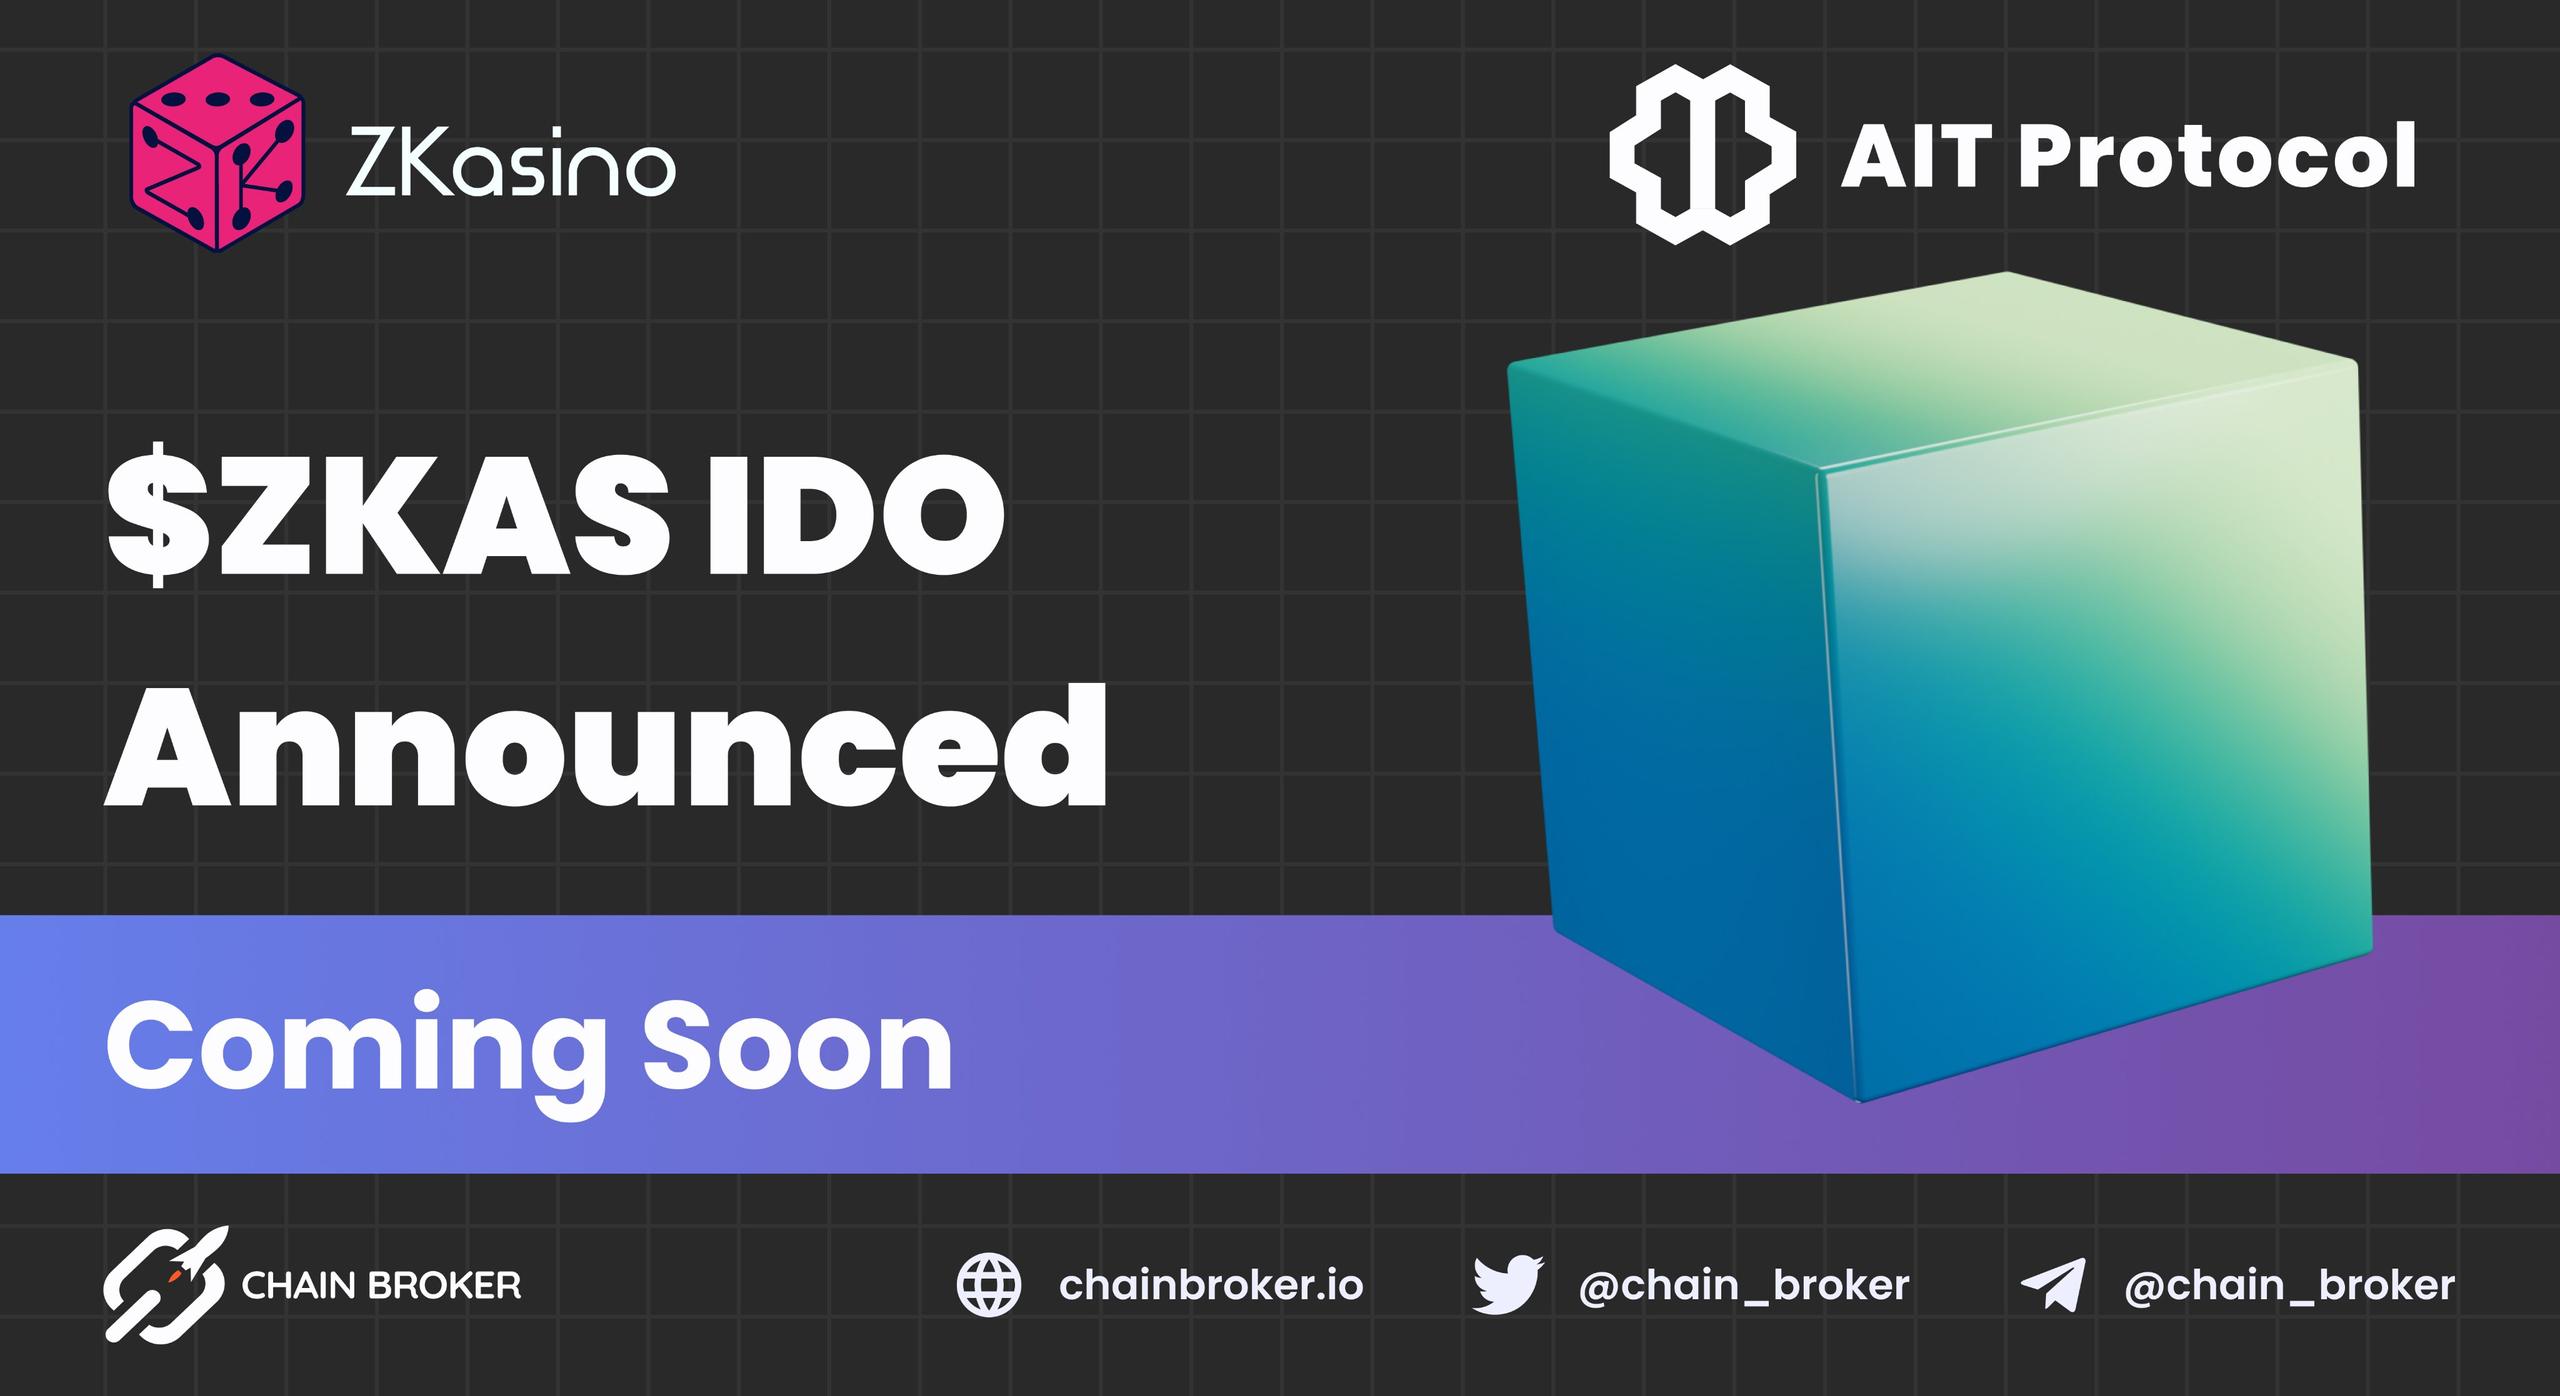 ZKasino has announced its IDO on AIT Launchpad